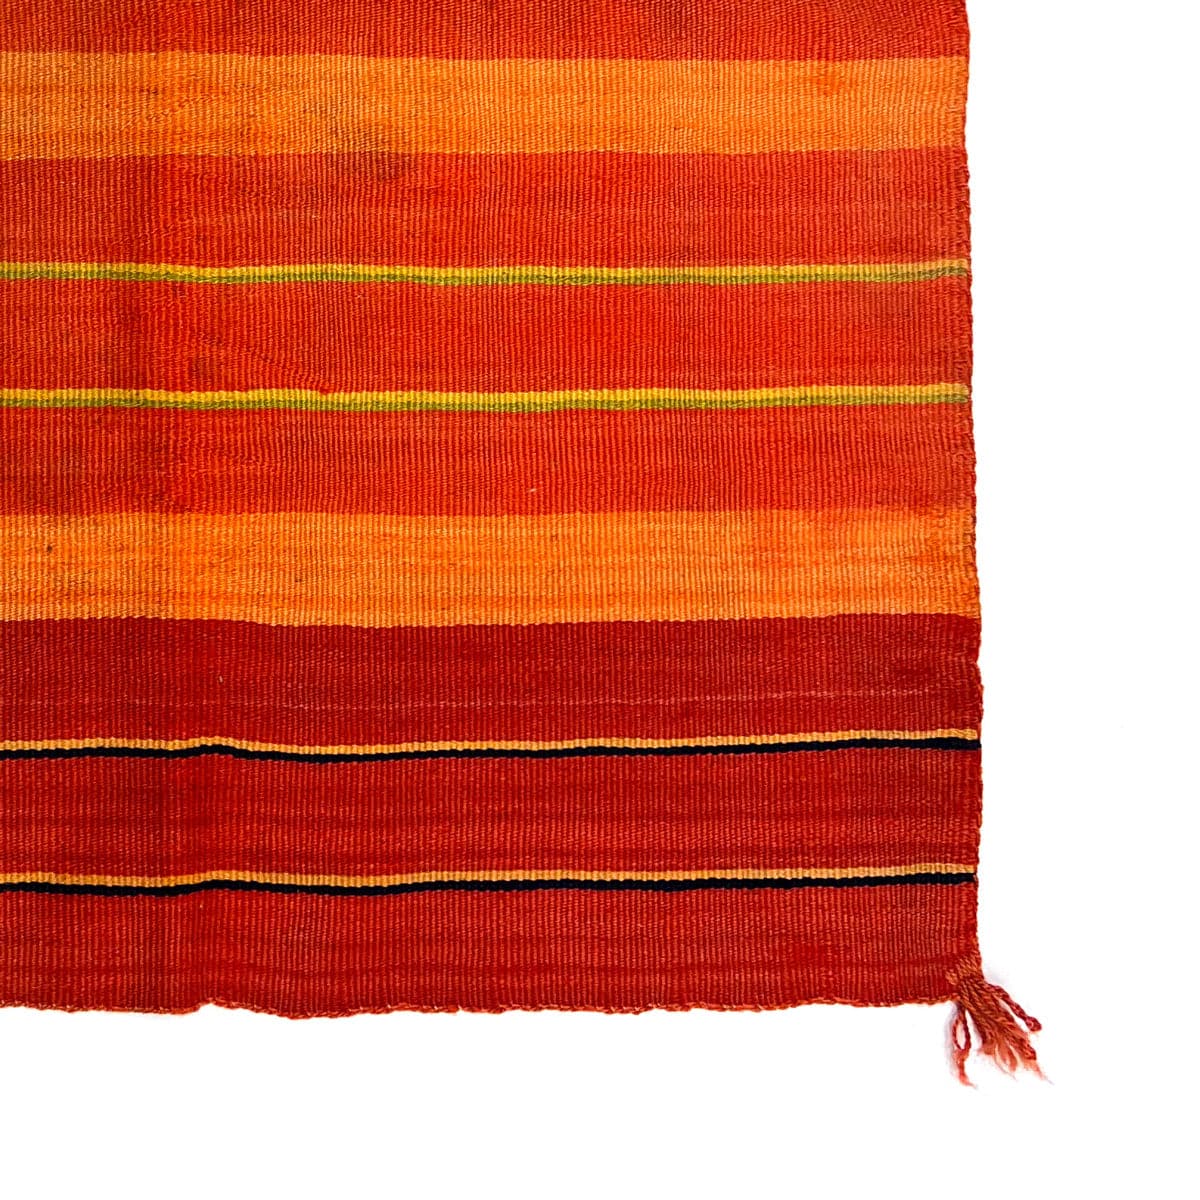 Navajo Transitional Double Saddle Blanket with Indigo Dye c. 1880s, 45" x 34" (T6386) 1